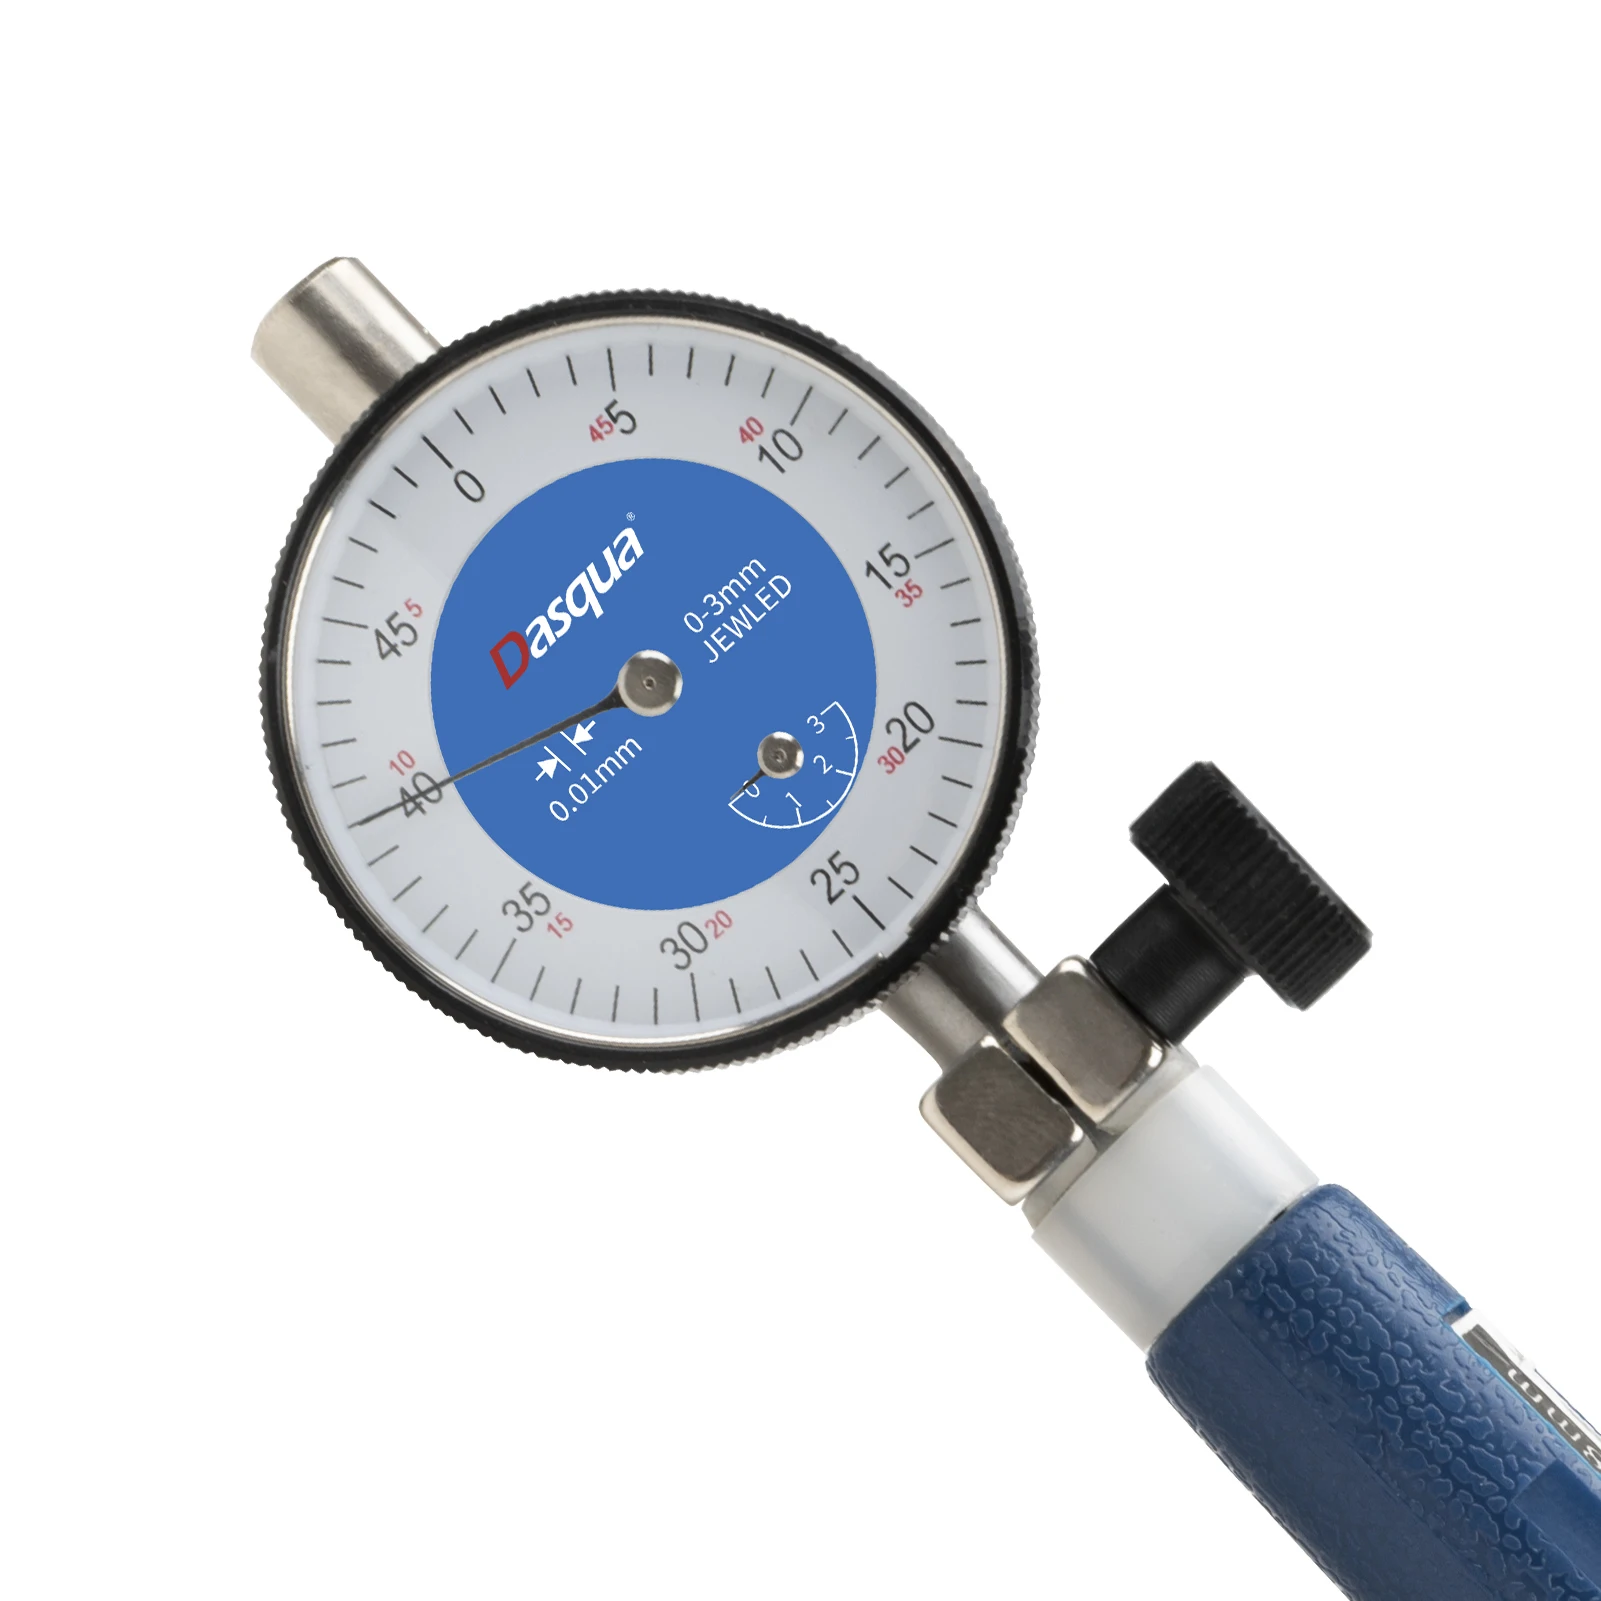 

Dasqua 50-160mm Resolution 0.01mm Inner Diameter Dial Indicator Bore Gauge Measuring Tool